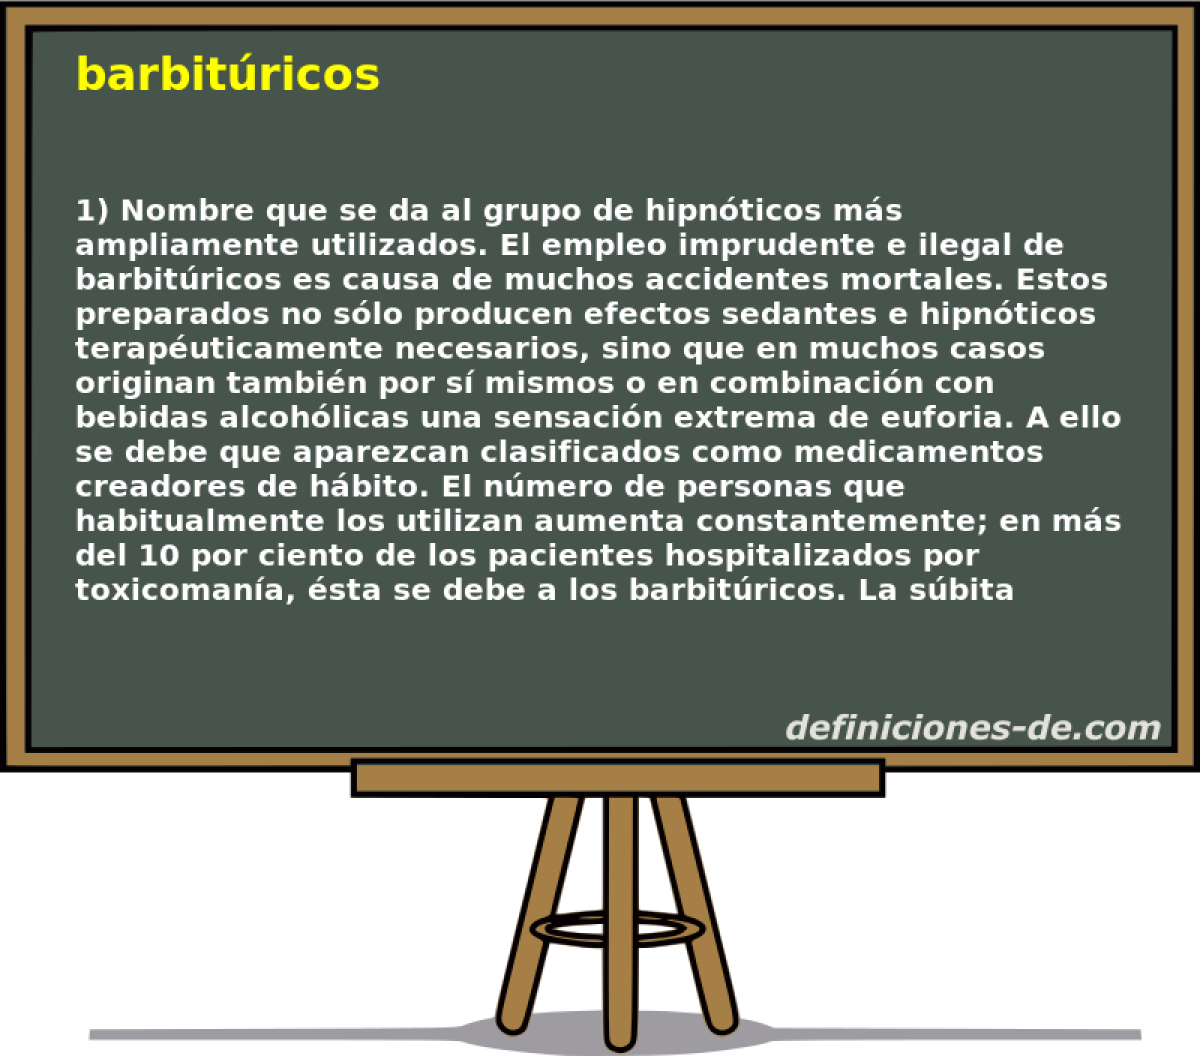 barbitricos 